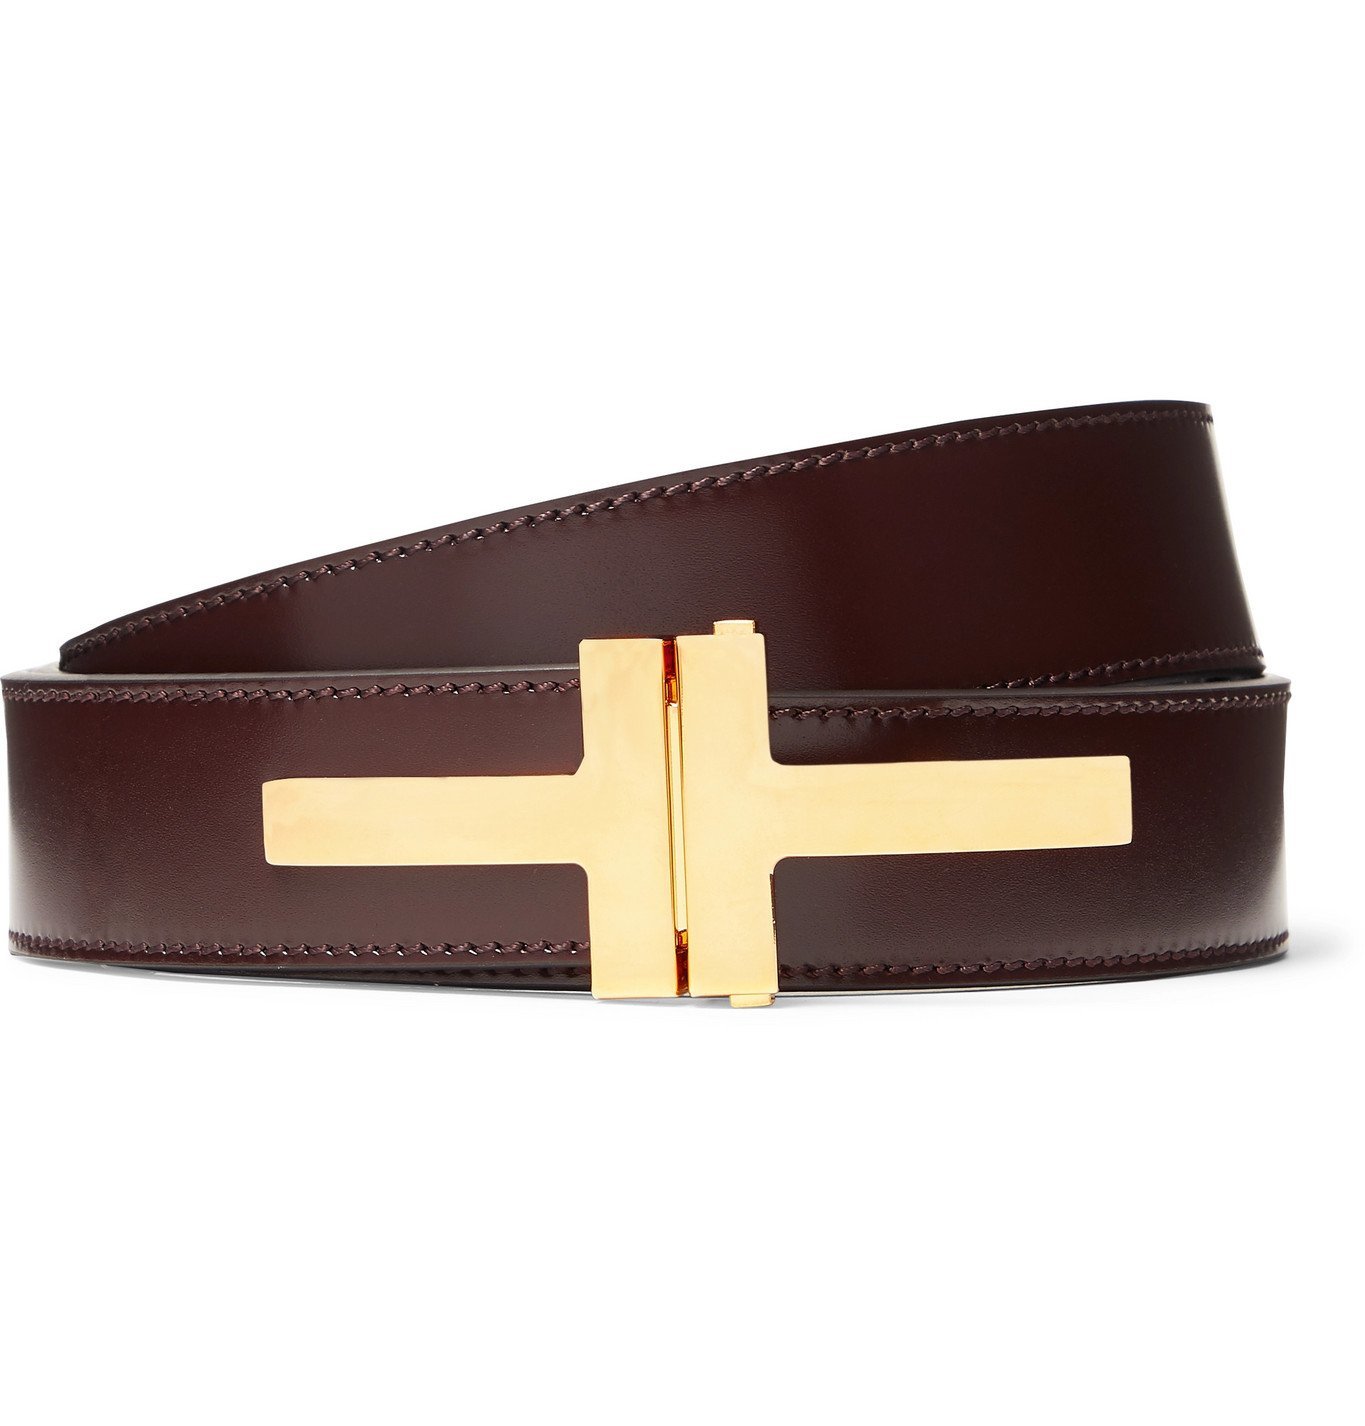 TOM FORD - 3cm Leather Belt - Brown TOM FORD